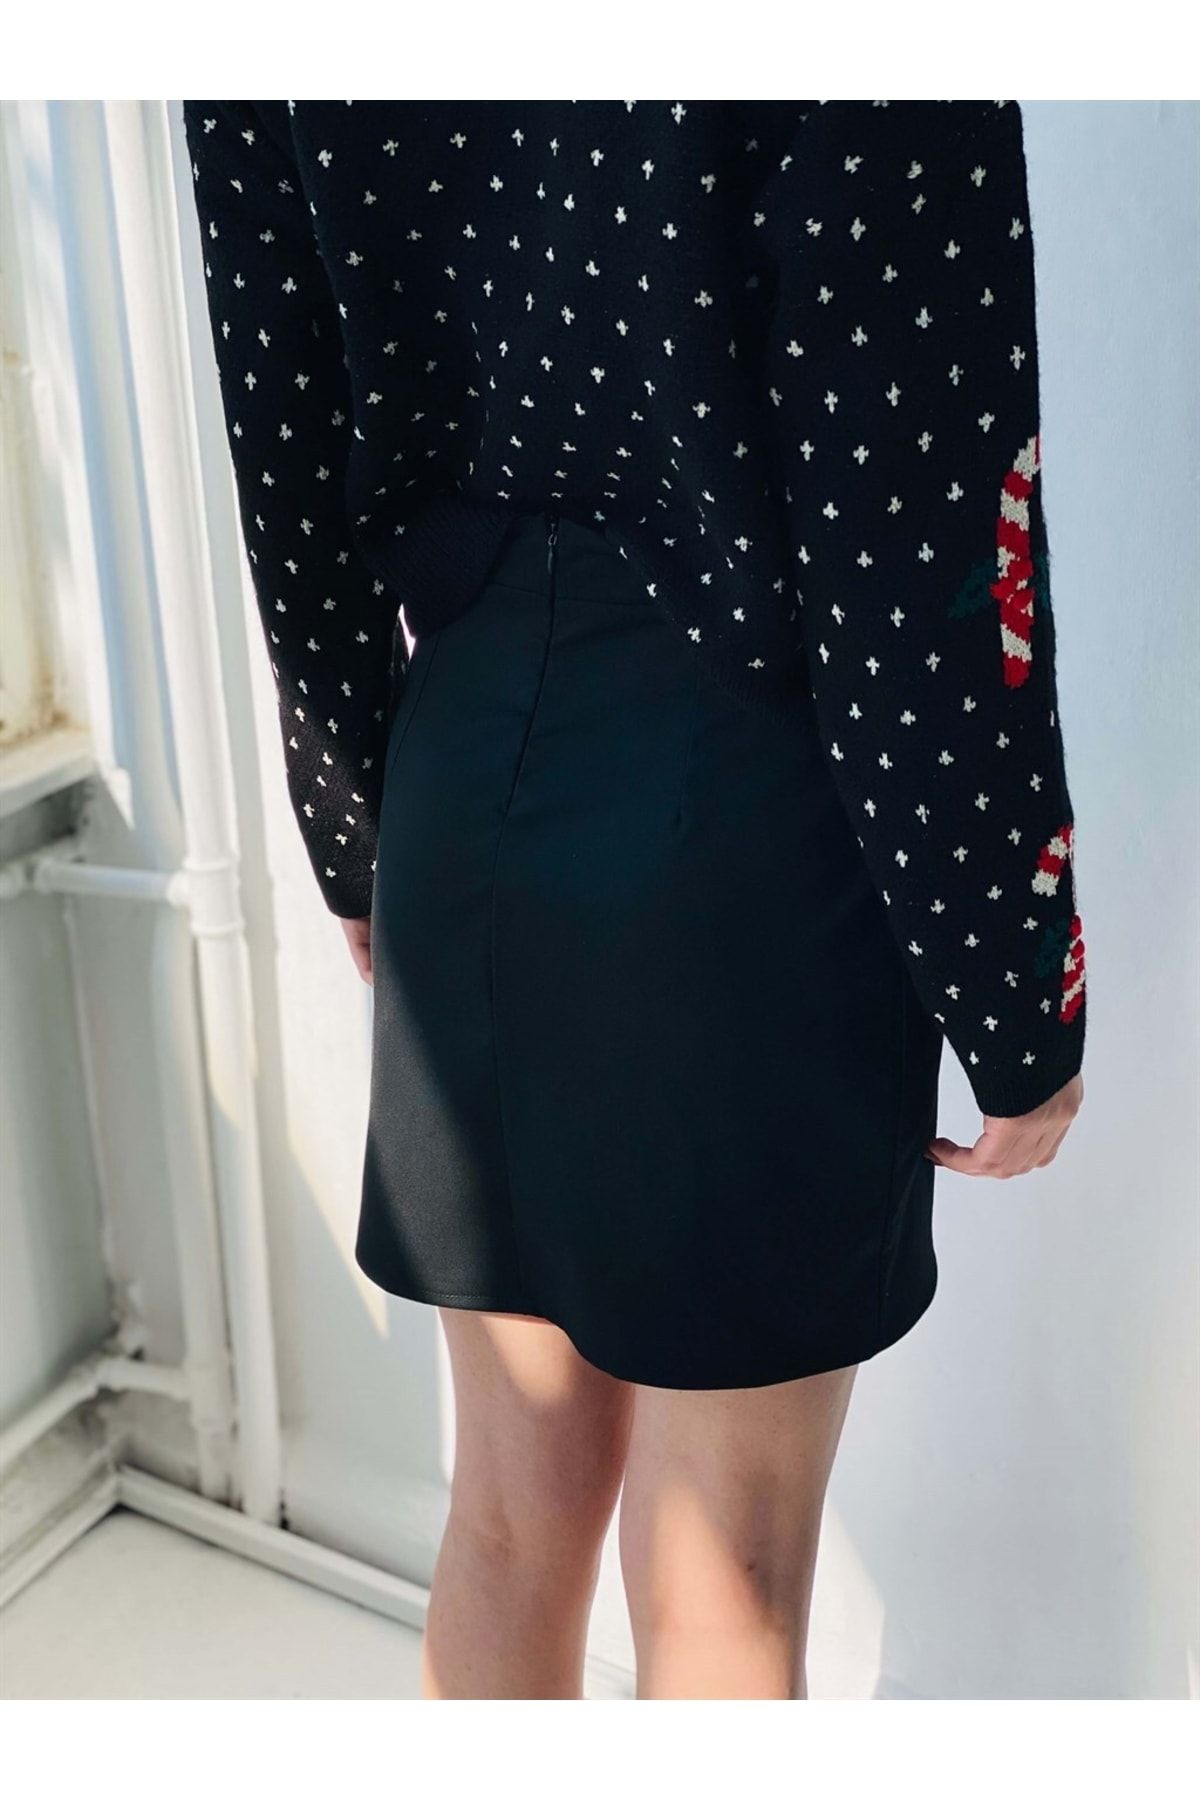 Retrobird Woven Fabric Zippered Underwear Floral Patterned Black Mini Slit  Women's Skirt